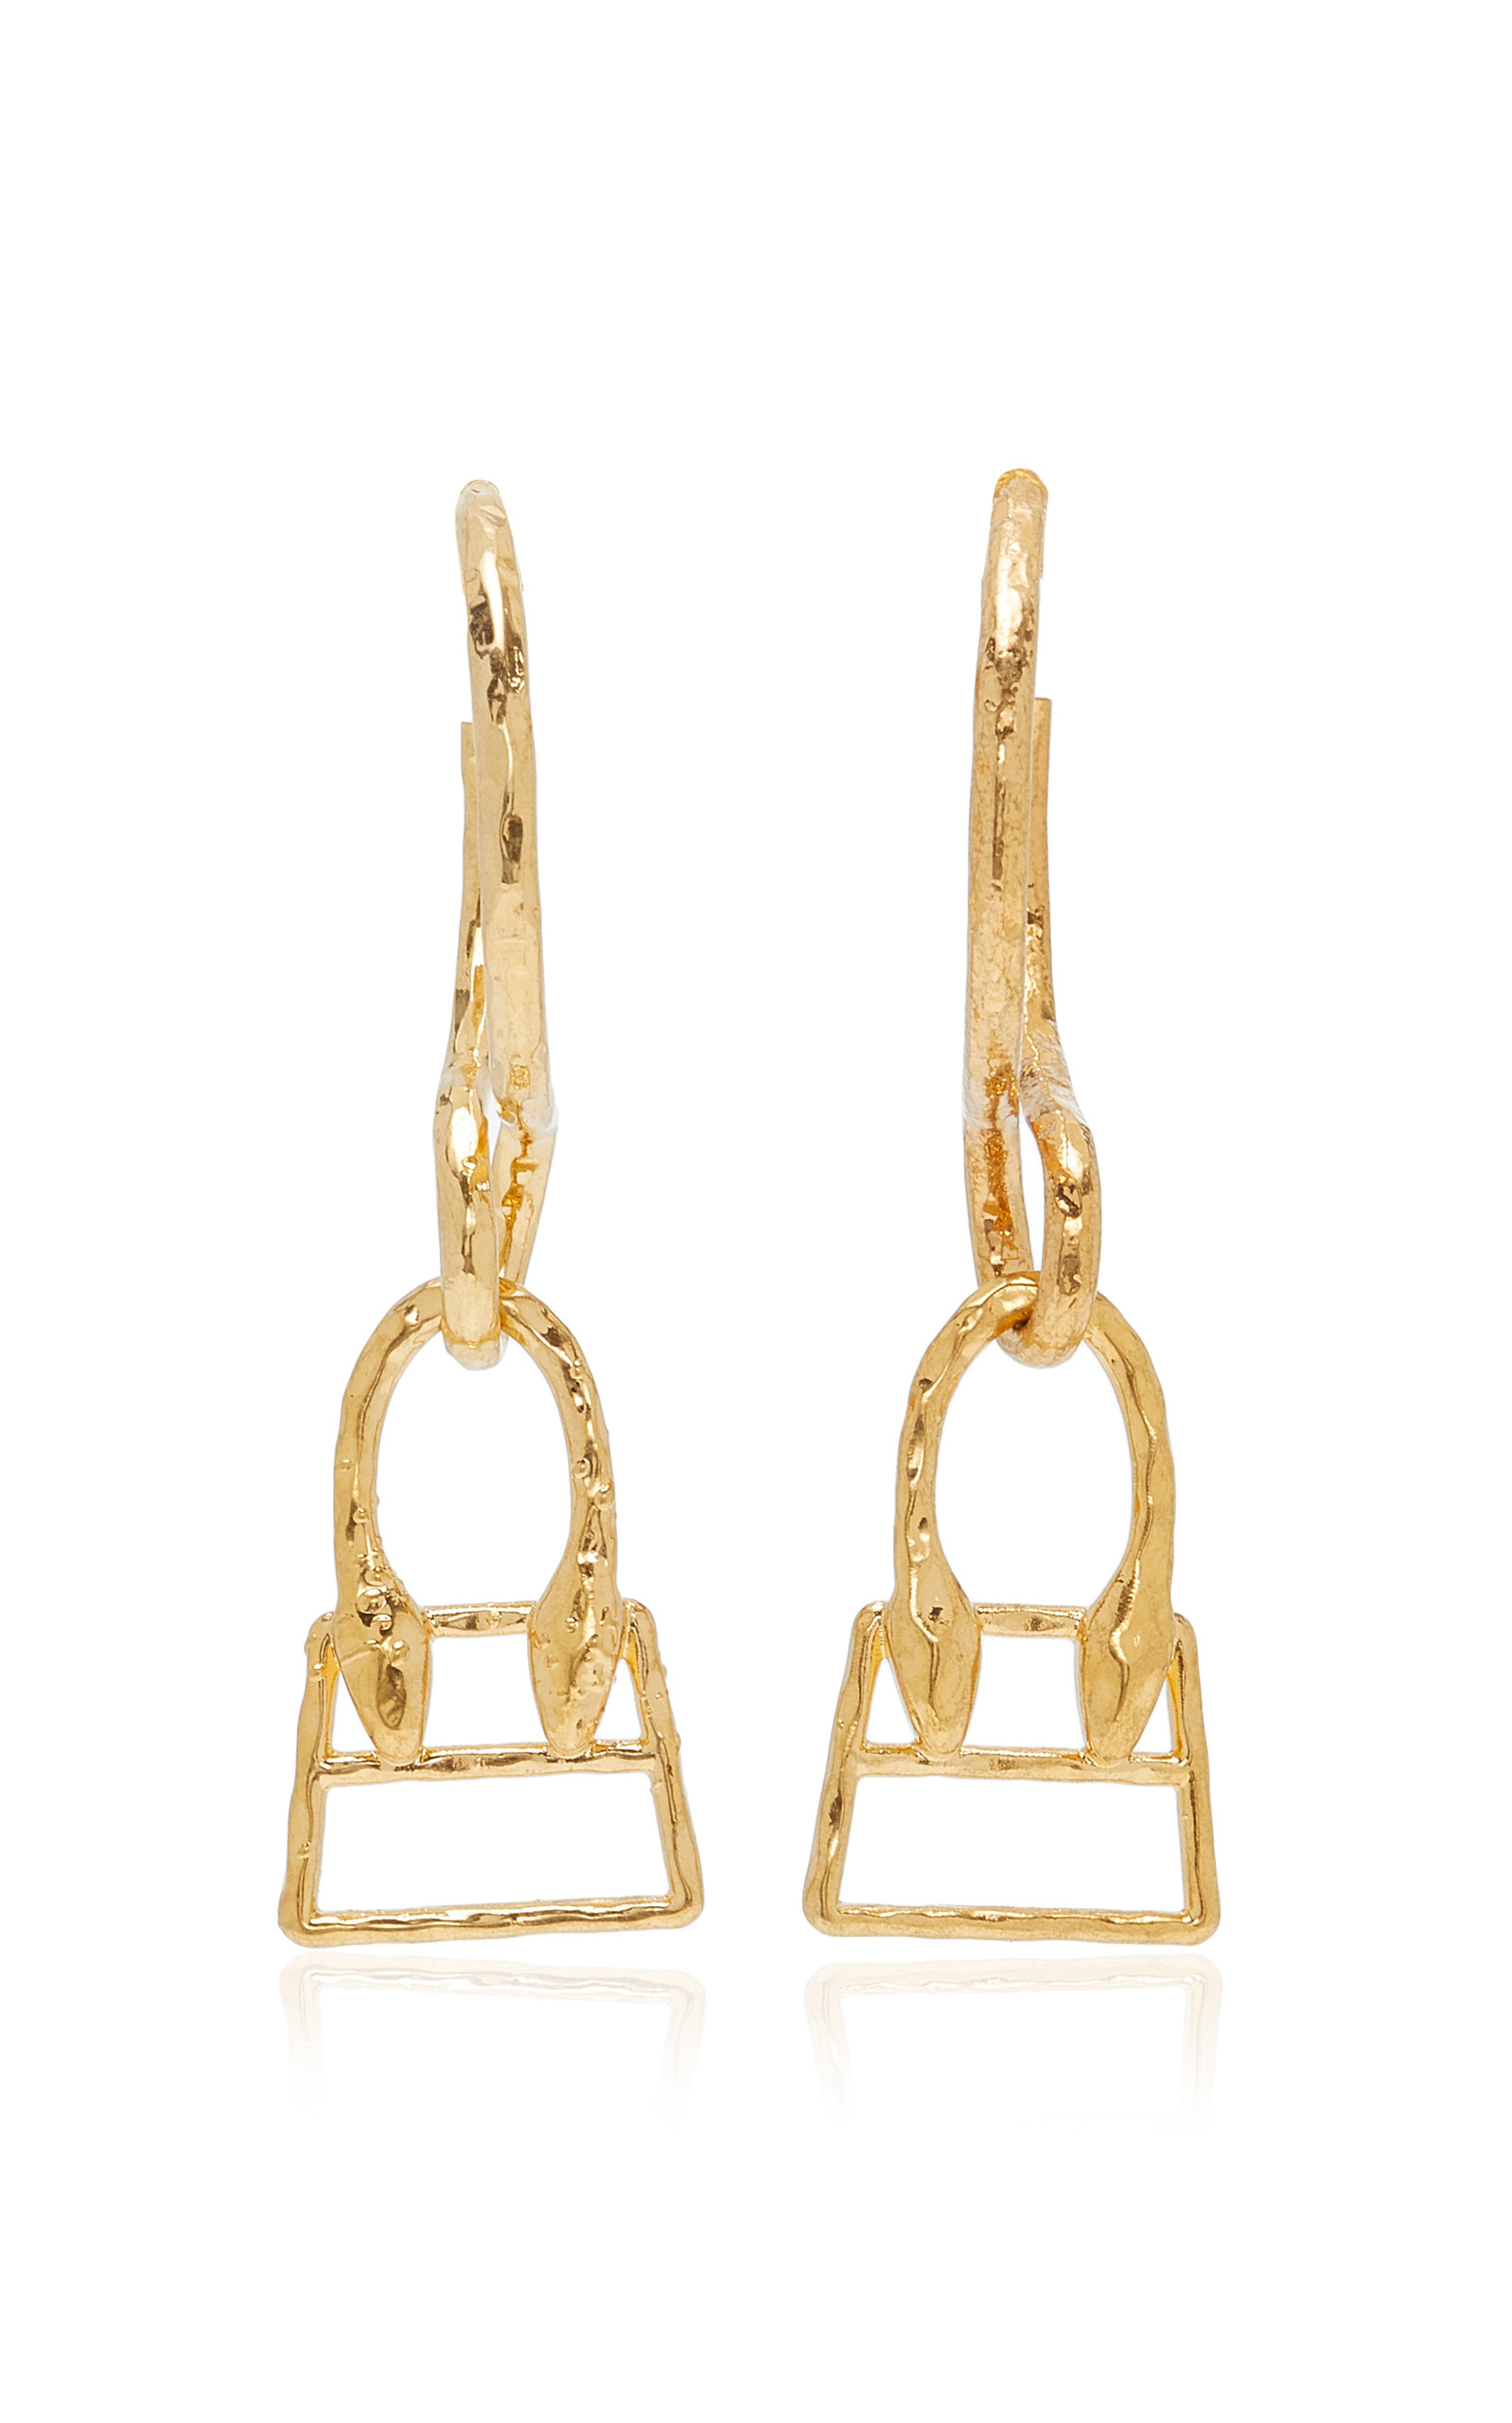 Jacquemus - Women's Les Creoles Chiquita Gold-Tone Earrings - Gold - Moda Operandi - Gifts For Her